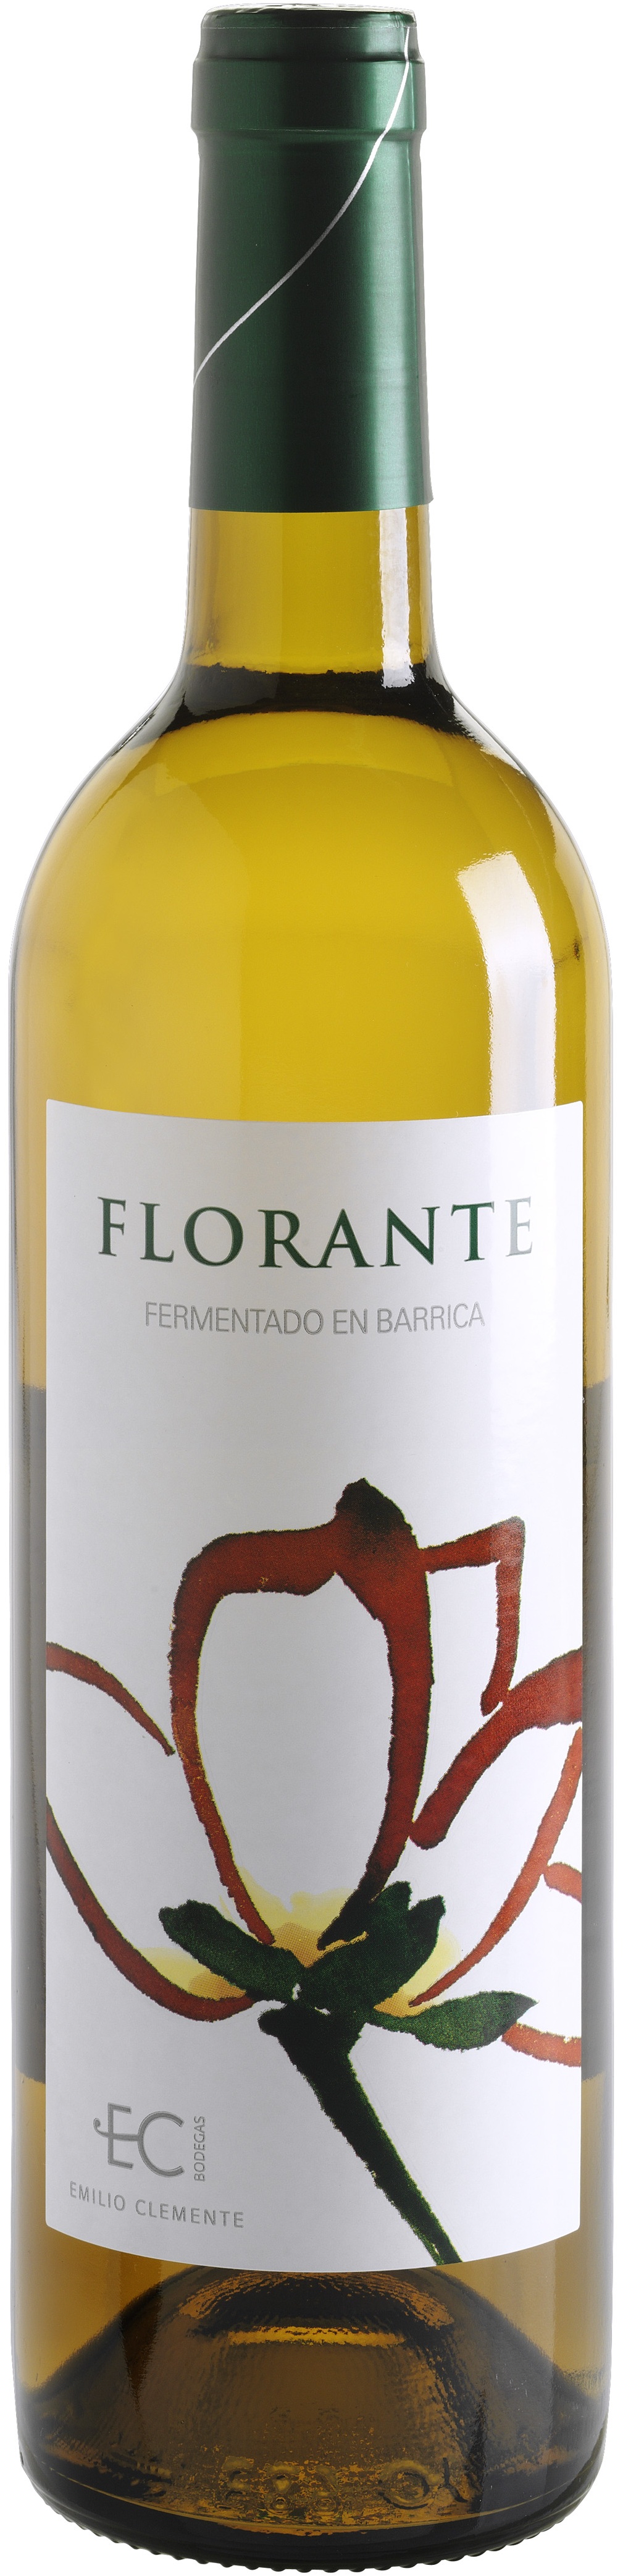 Logo del vino Florante Fermentado